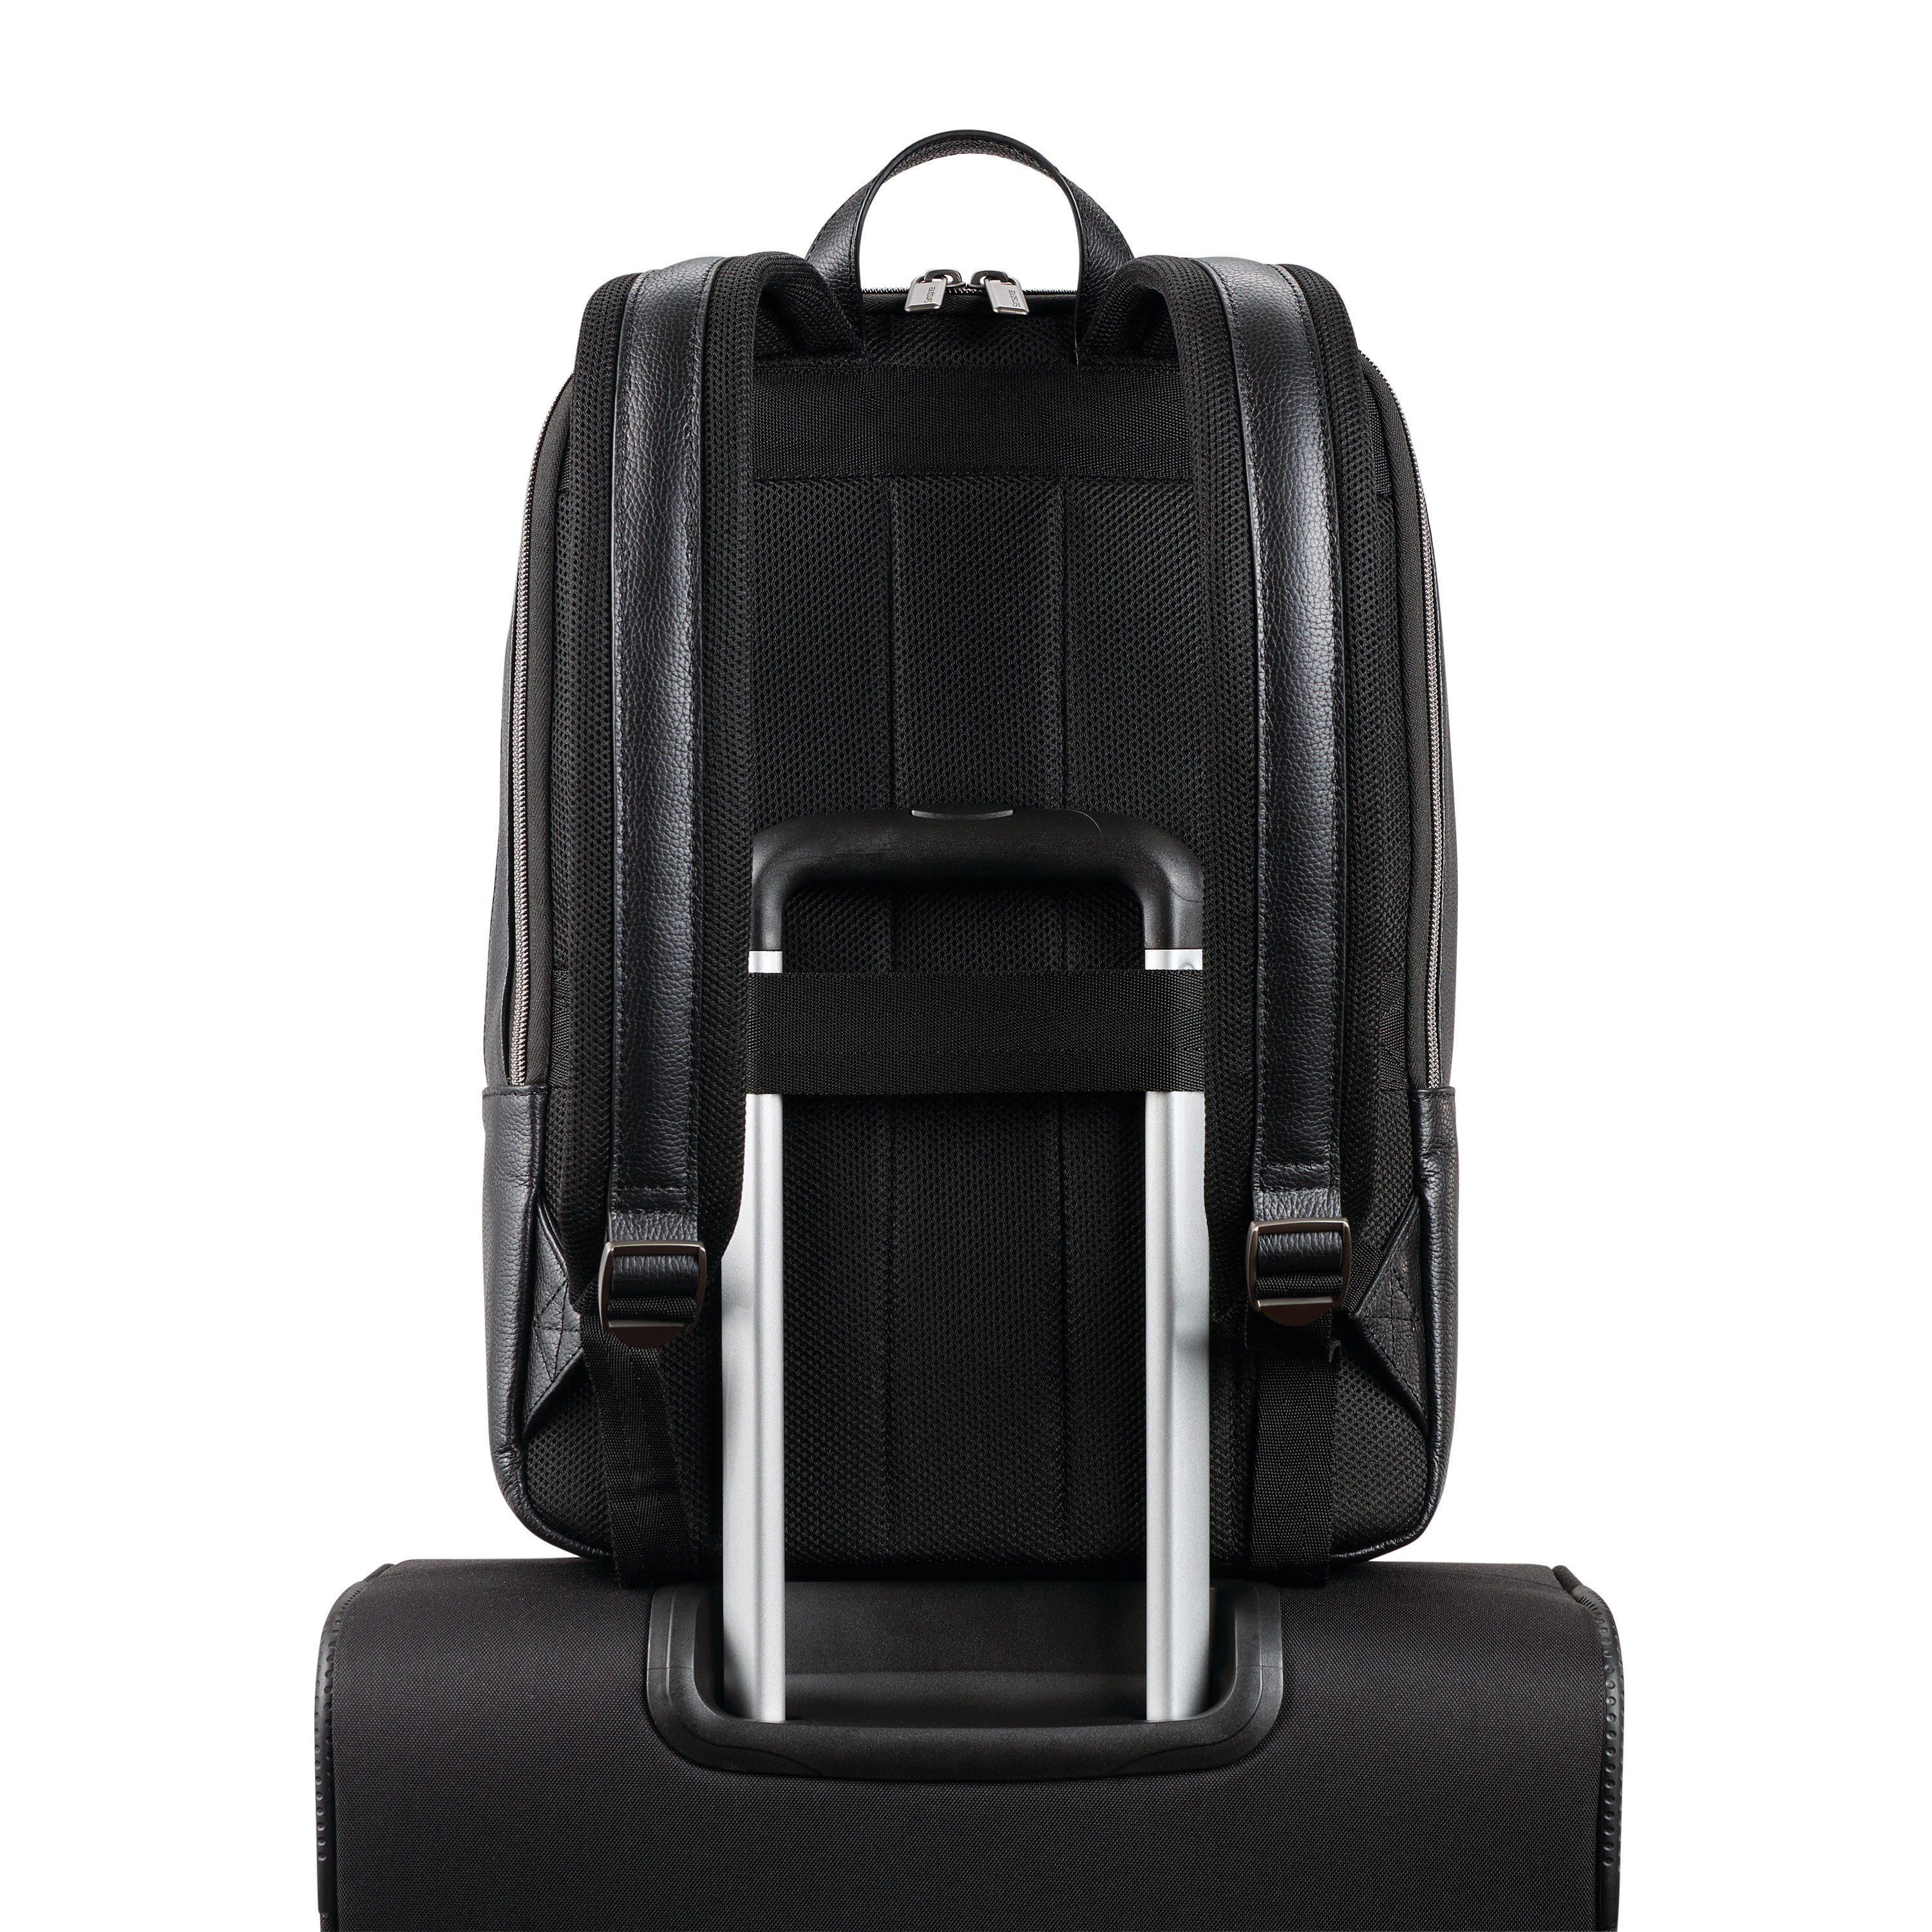 Michael Kors Rhea Slim Pebble Leather Backpack - Macy's